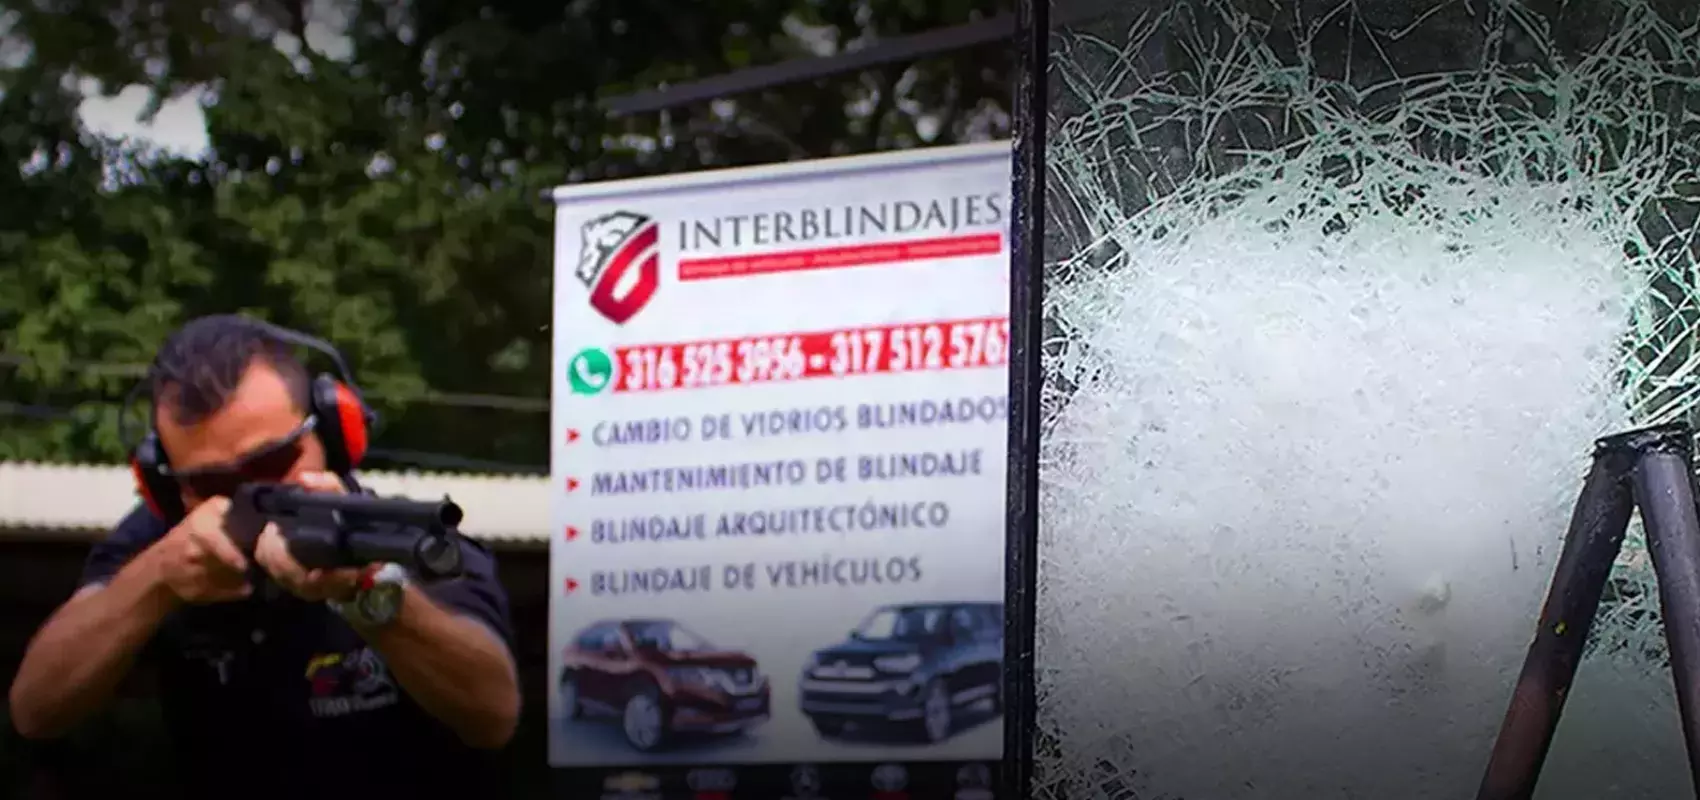 Internacional de Blindajes Interblindajes